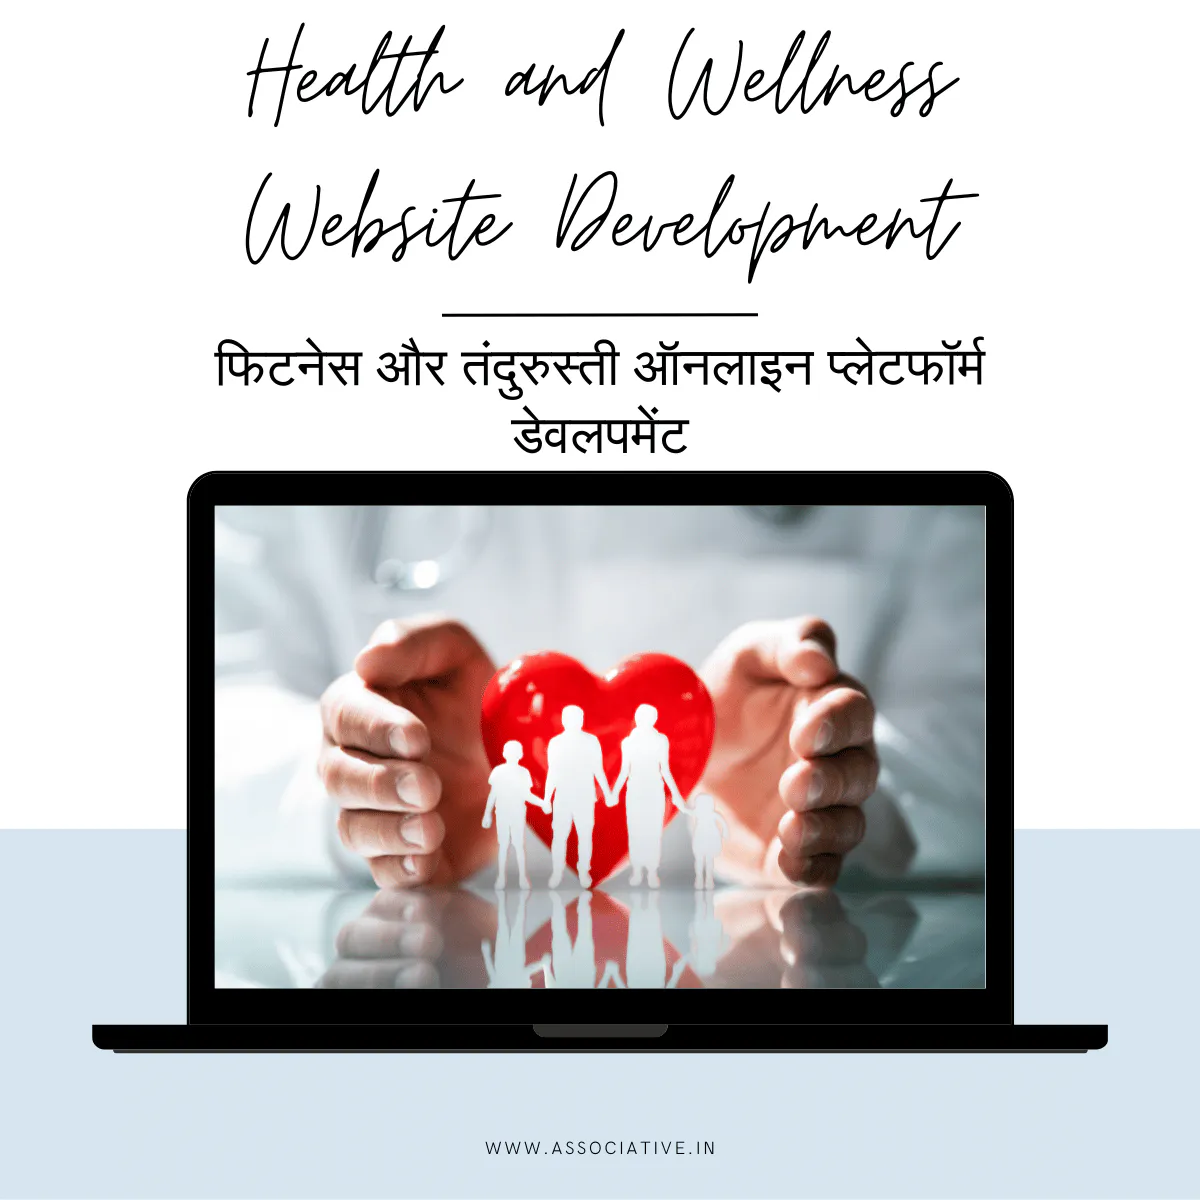 Health and Wellness Website Development